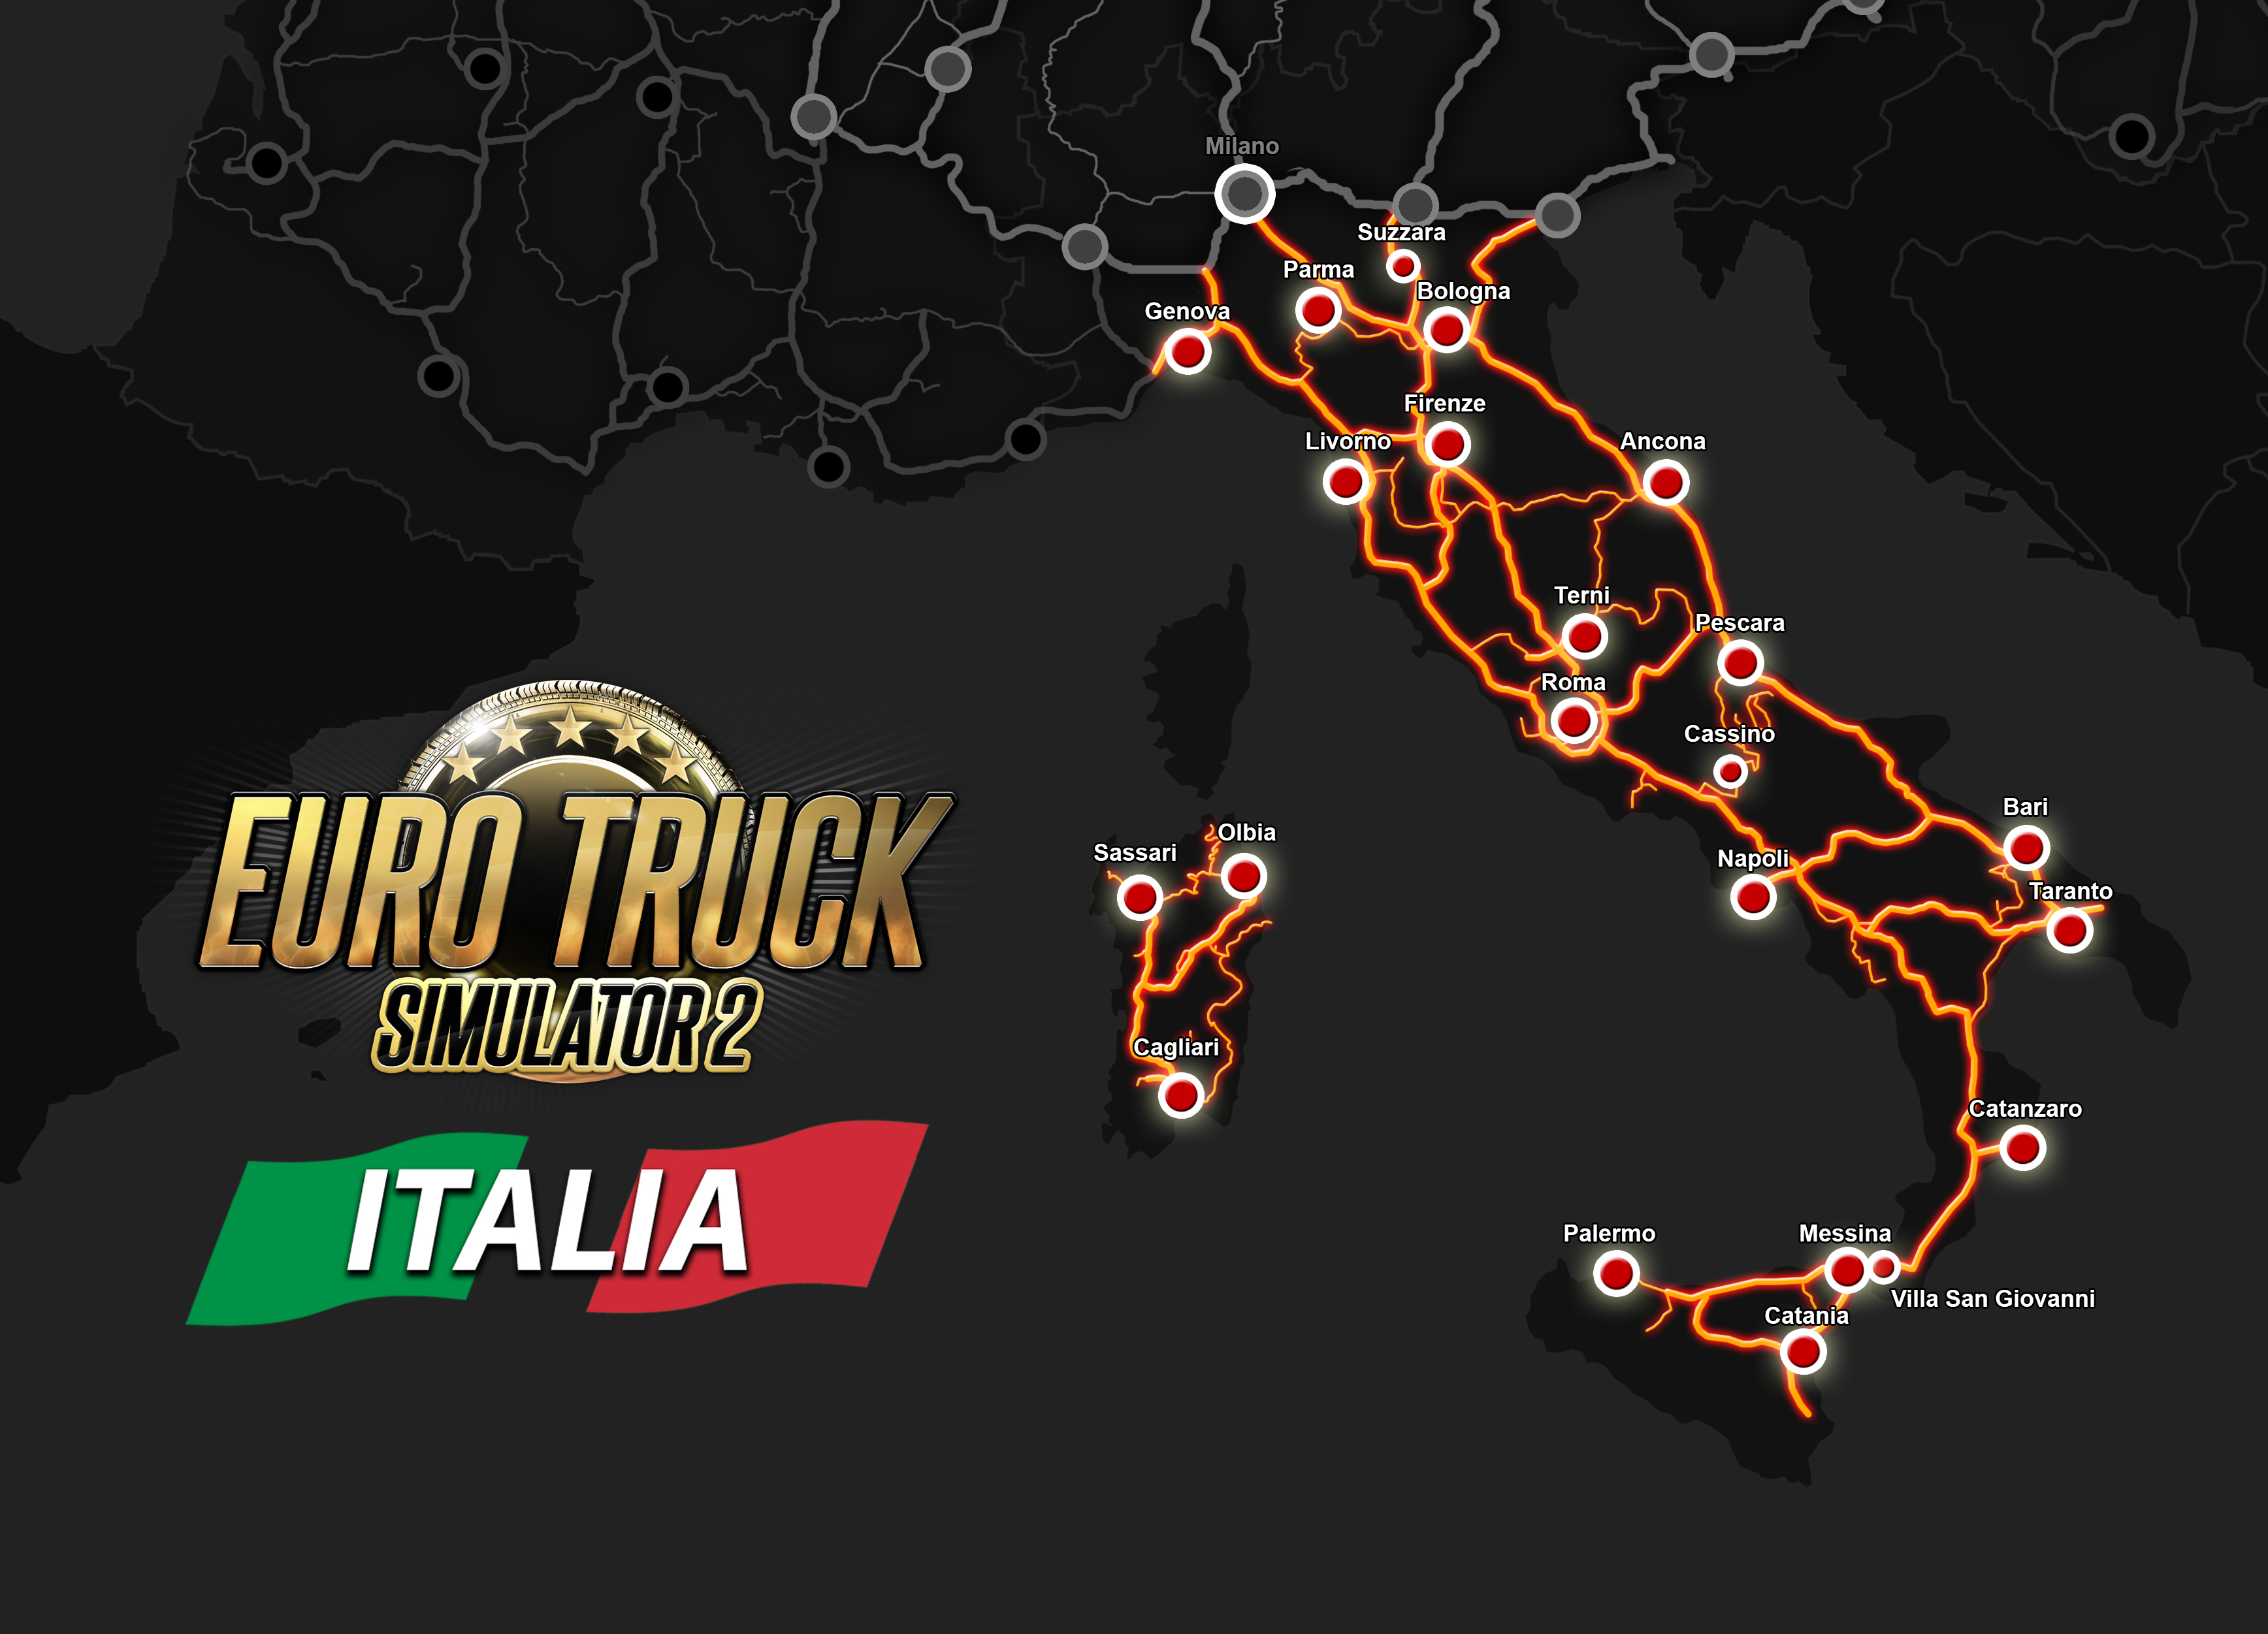 Етс2 длс. ETS 2 Italia DLC. Италия етс 2. Euro Truck Simulator 2 Италия. Euro Truck Simulator 2 карта Италии.